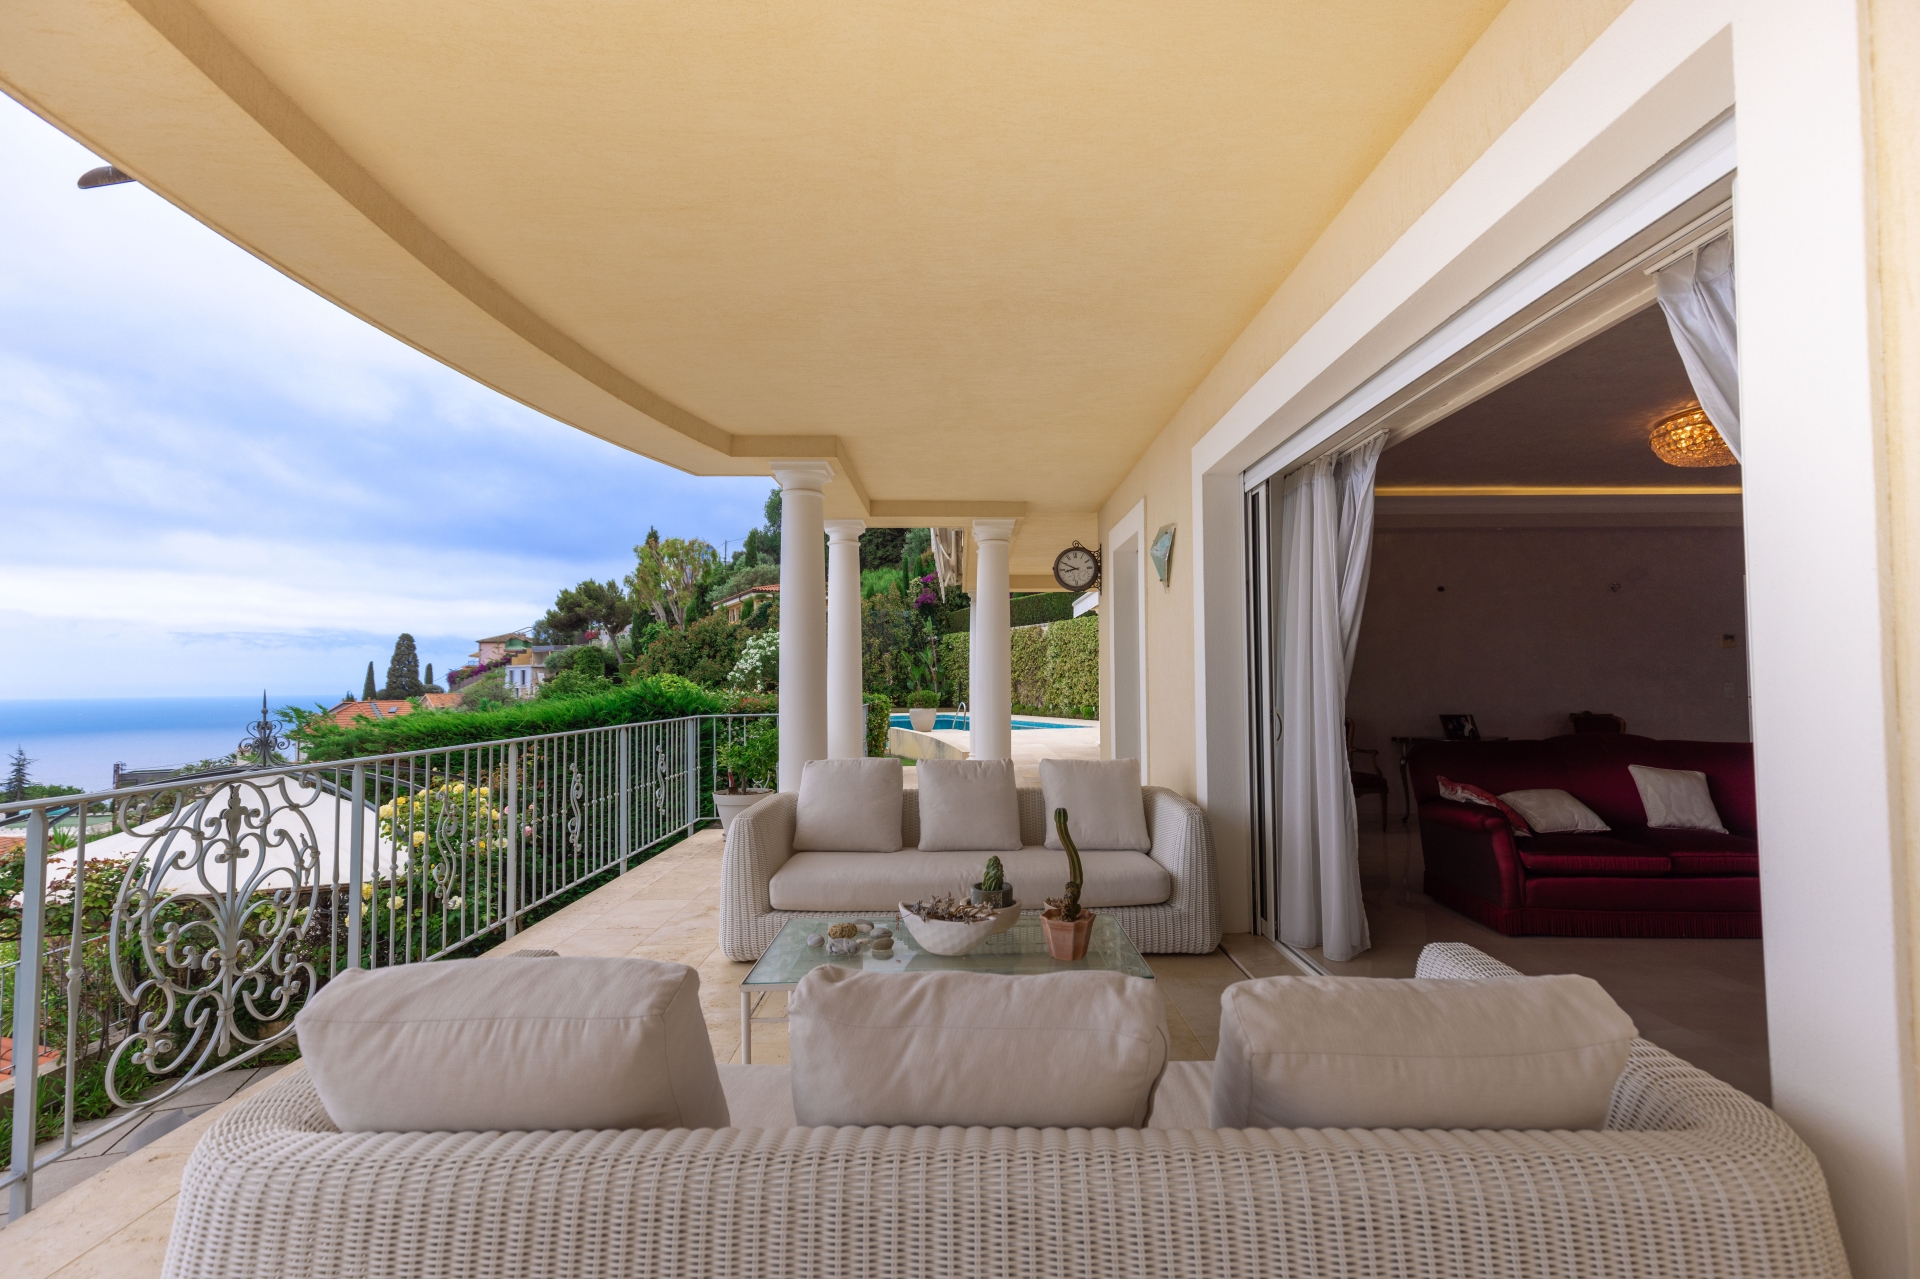 Dotta Villa a vendre - MARIE-CLAIRE - Roquebrune-Cap-Martin - Roquebrune-Cap-Martin - img074a9629